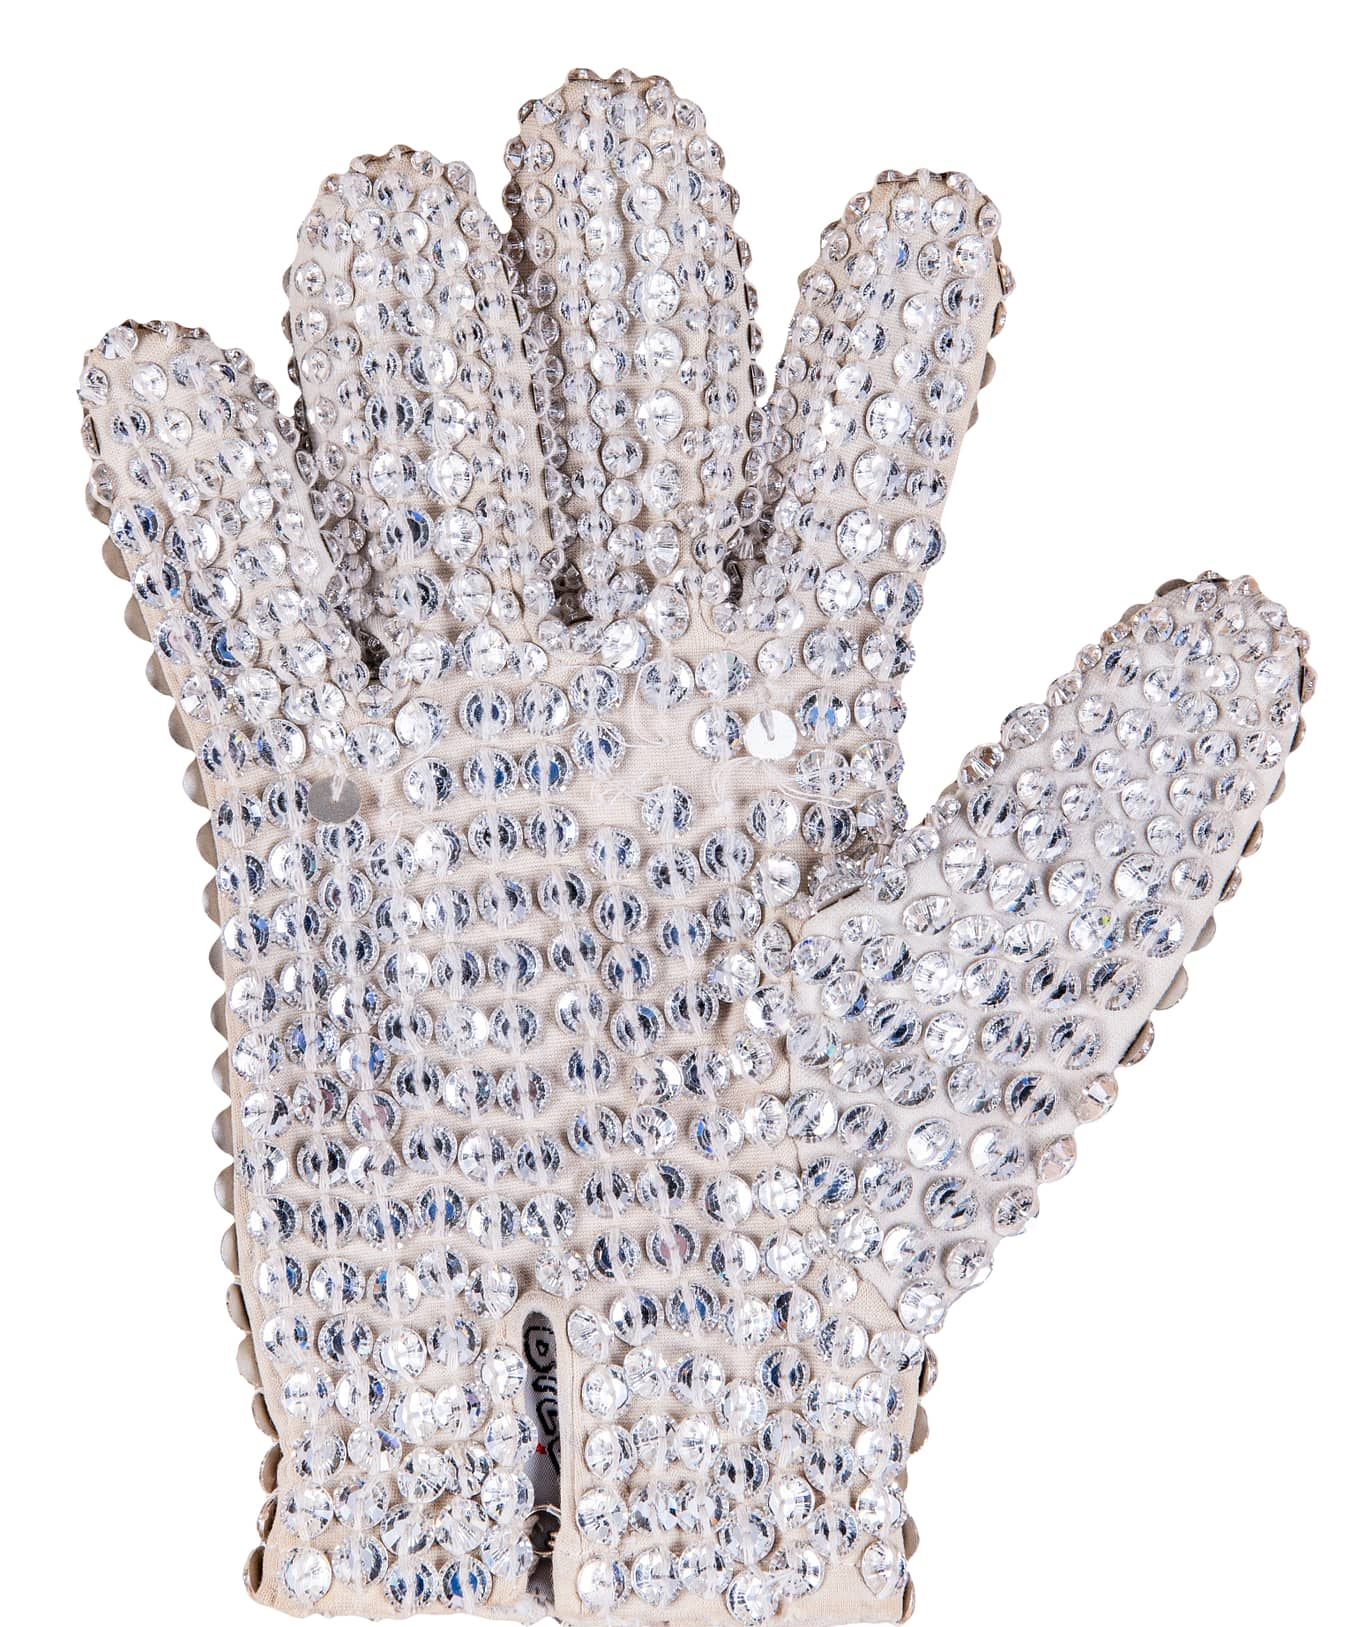 Michael Jackson's glittery glove up for auction - The San Diego  Union-Tribune